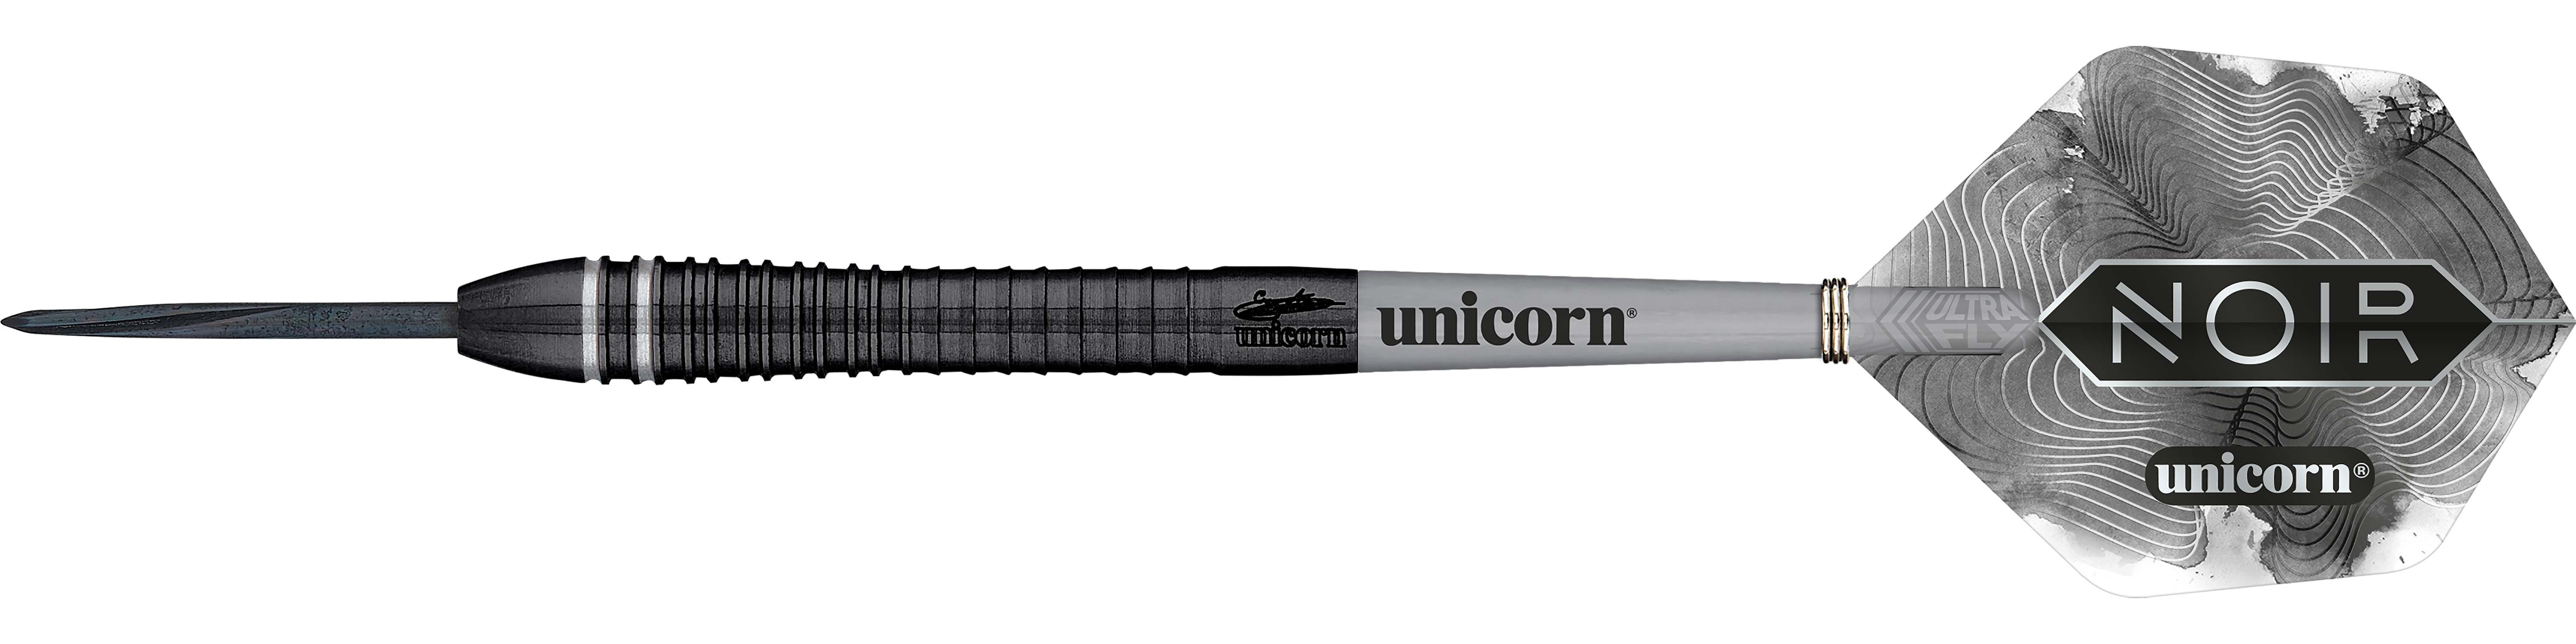 Unicorn World Champion Gary Anderson Noir Phase 6 Steeldarts